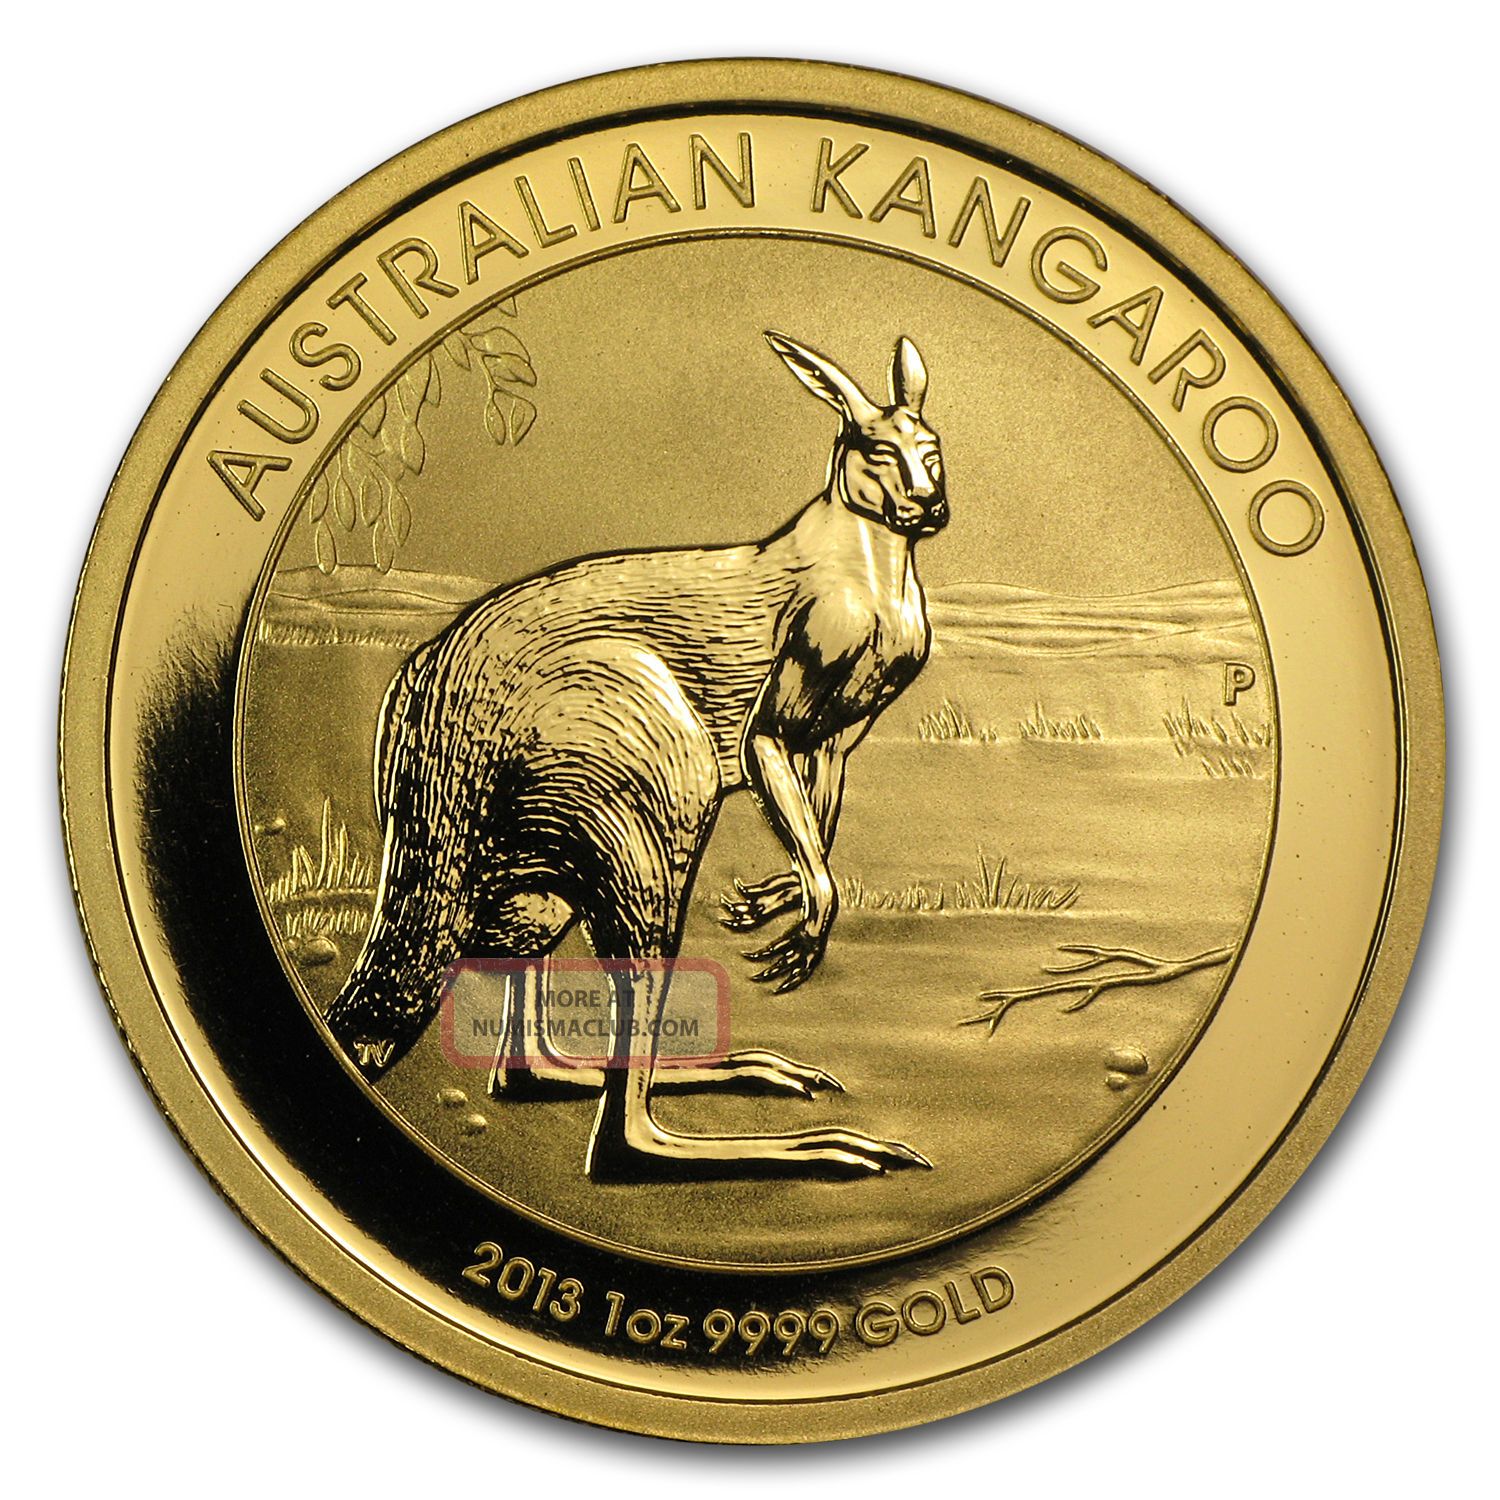 Perth 2012 Kangaroo Gold Coin - 1oz Gold photo